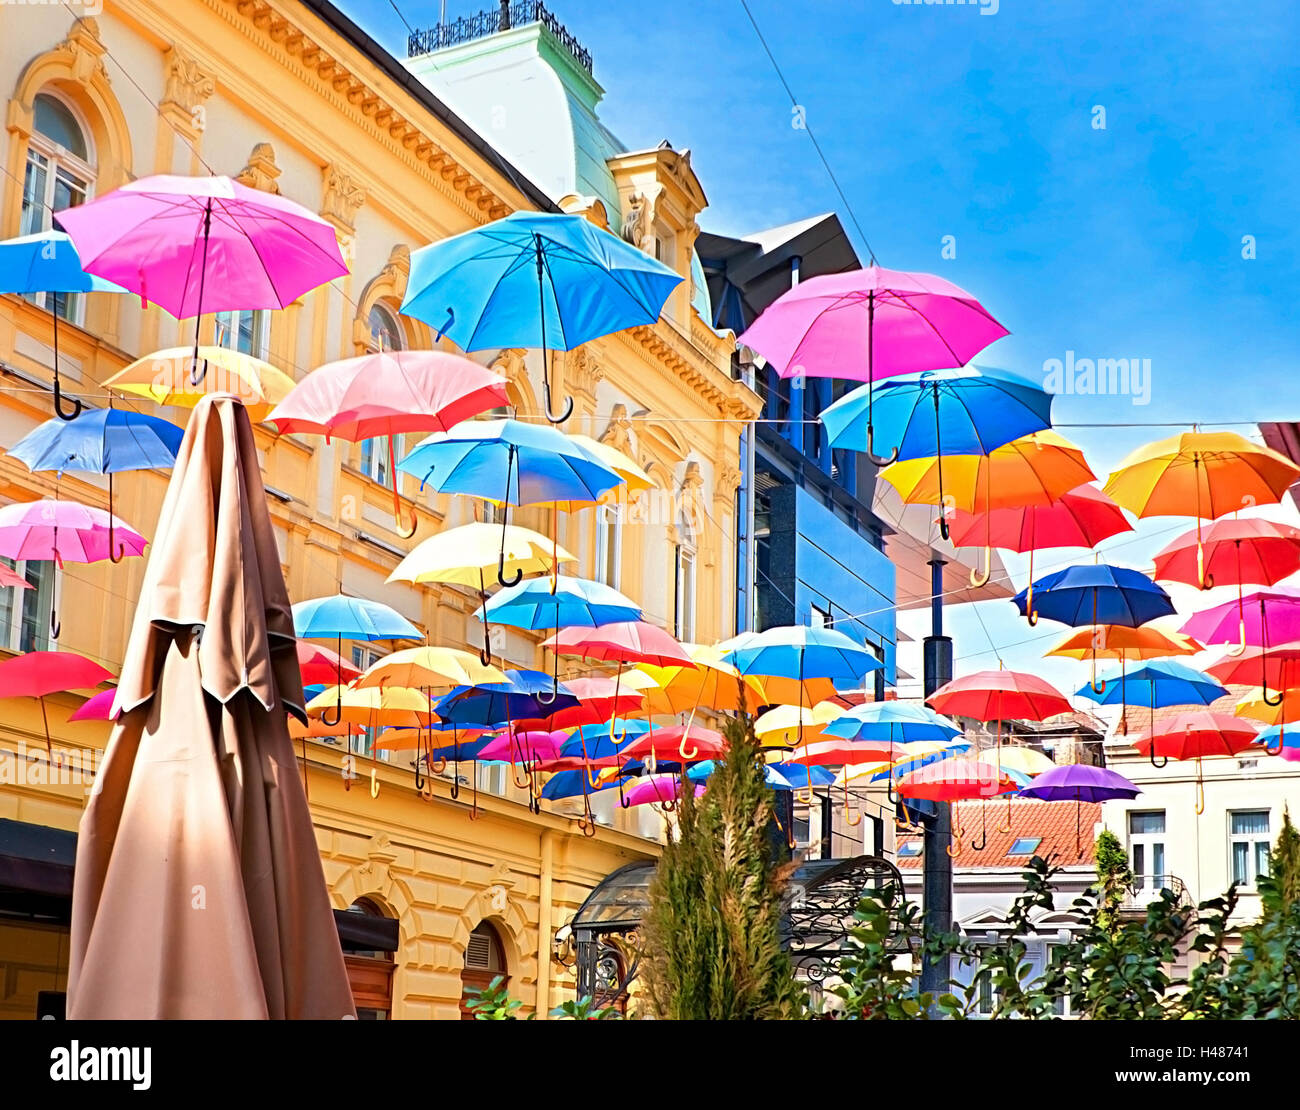 The big closed umbrella with many small open umbrellas on the background, Belgrade, Serbia. Stock Photo